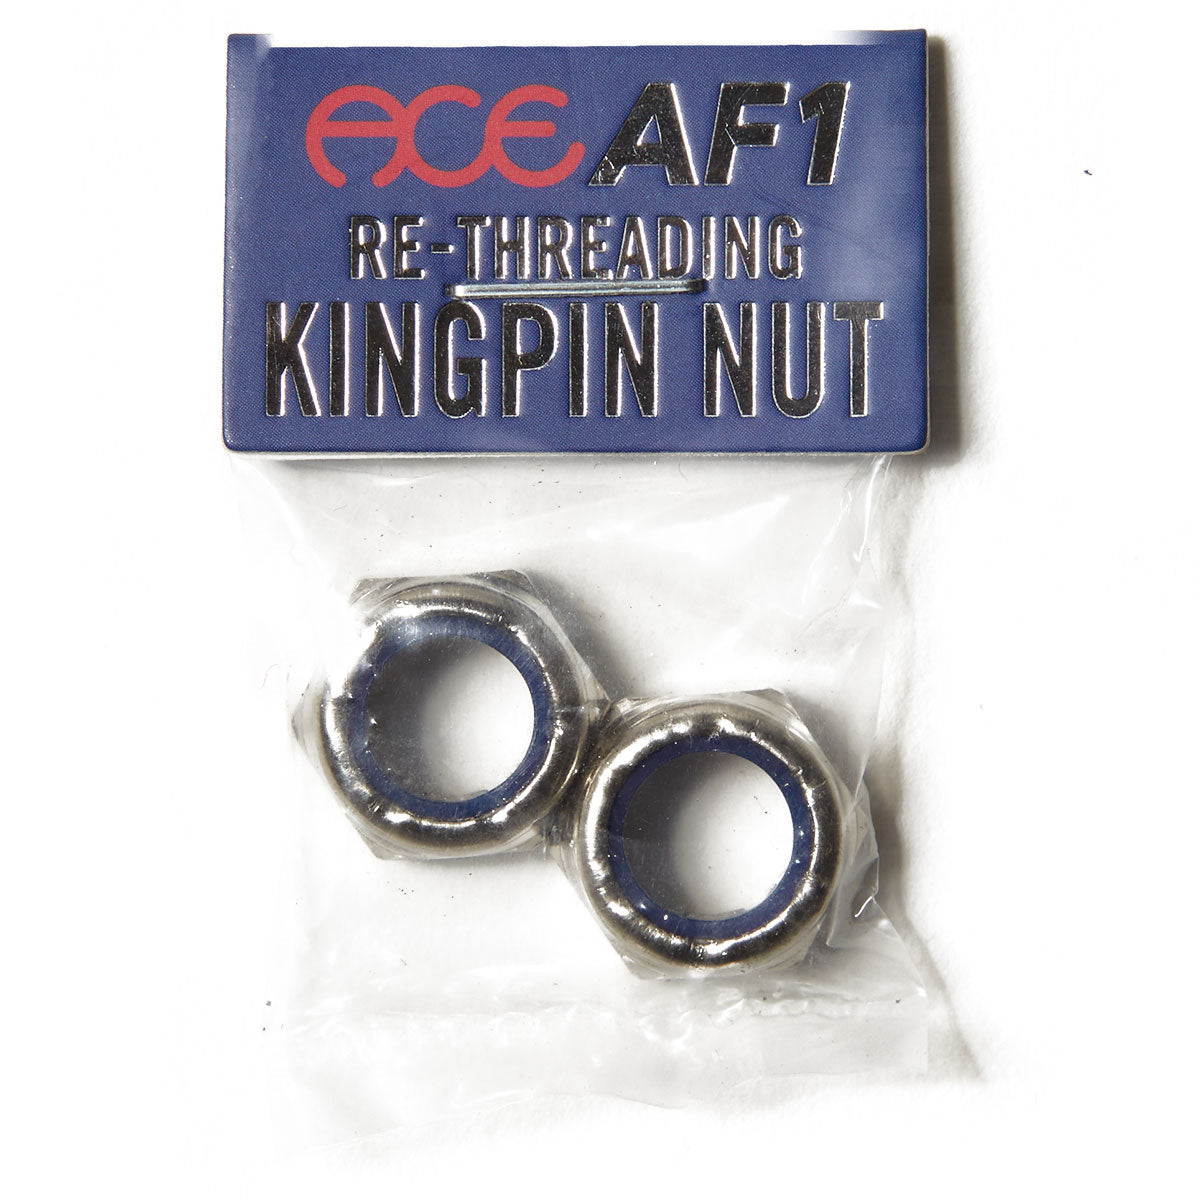 Ace AF1 Re-Threading Kingpin Nuts image 1